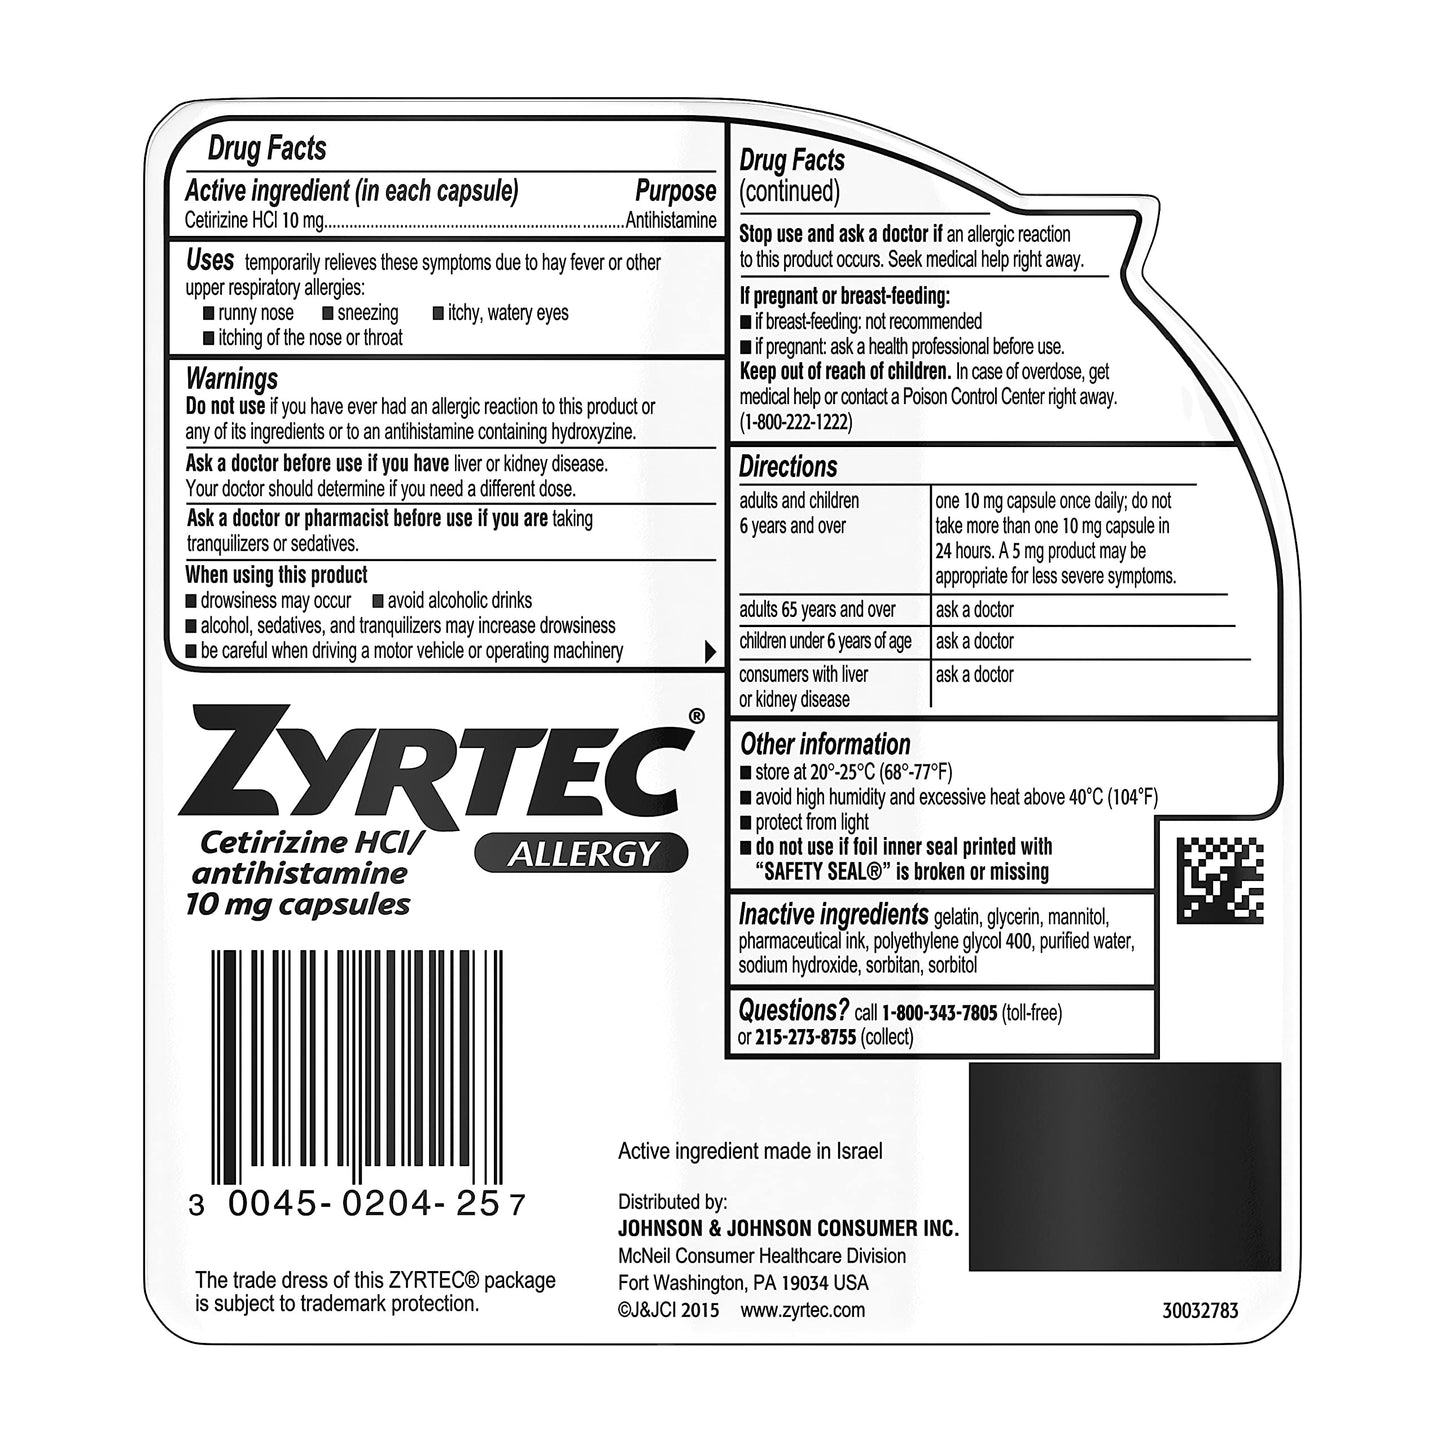 Zyrtec 24 HR Indoor/Outdoor Allergy Relief Liquid Gels Capsules, Cetirizine HCI Antihistamine, 25 ct